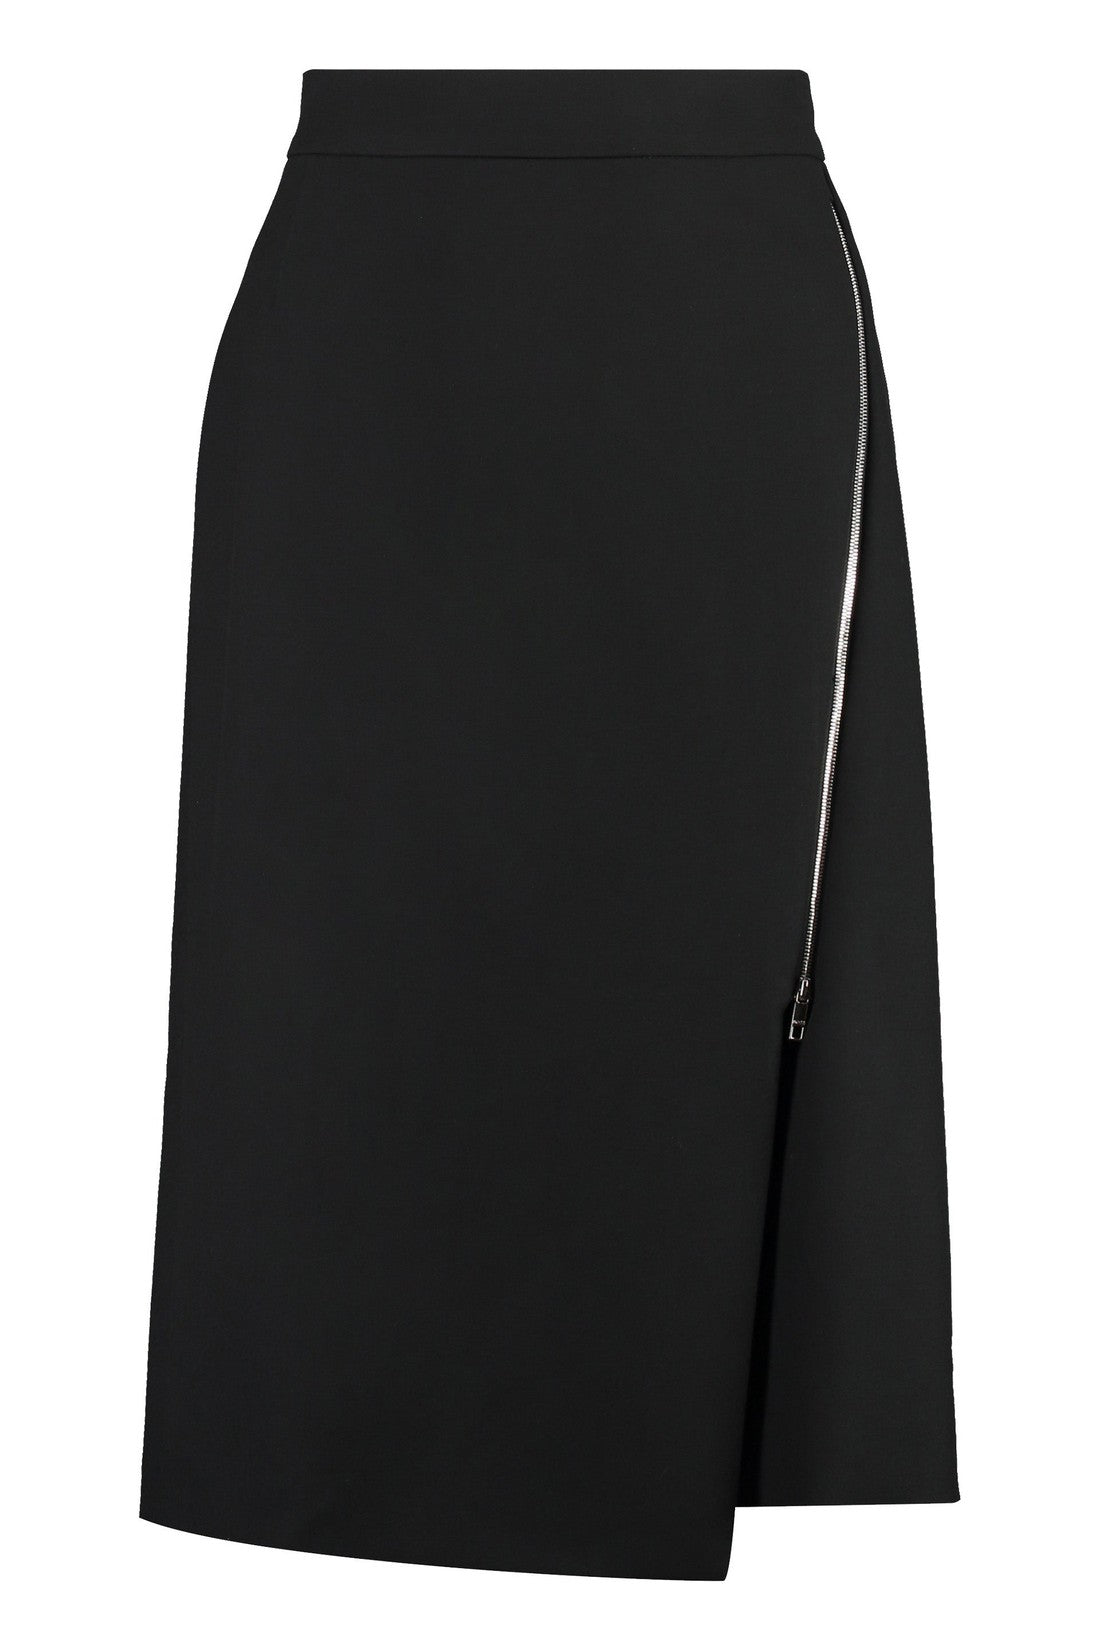 BOSS-OUTLET-SALE-A-line skirt-ARCHIVIST